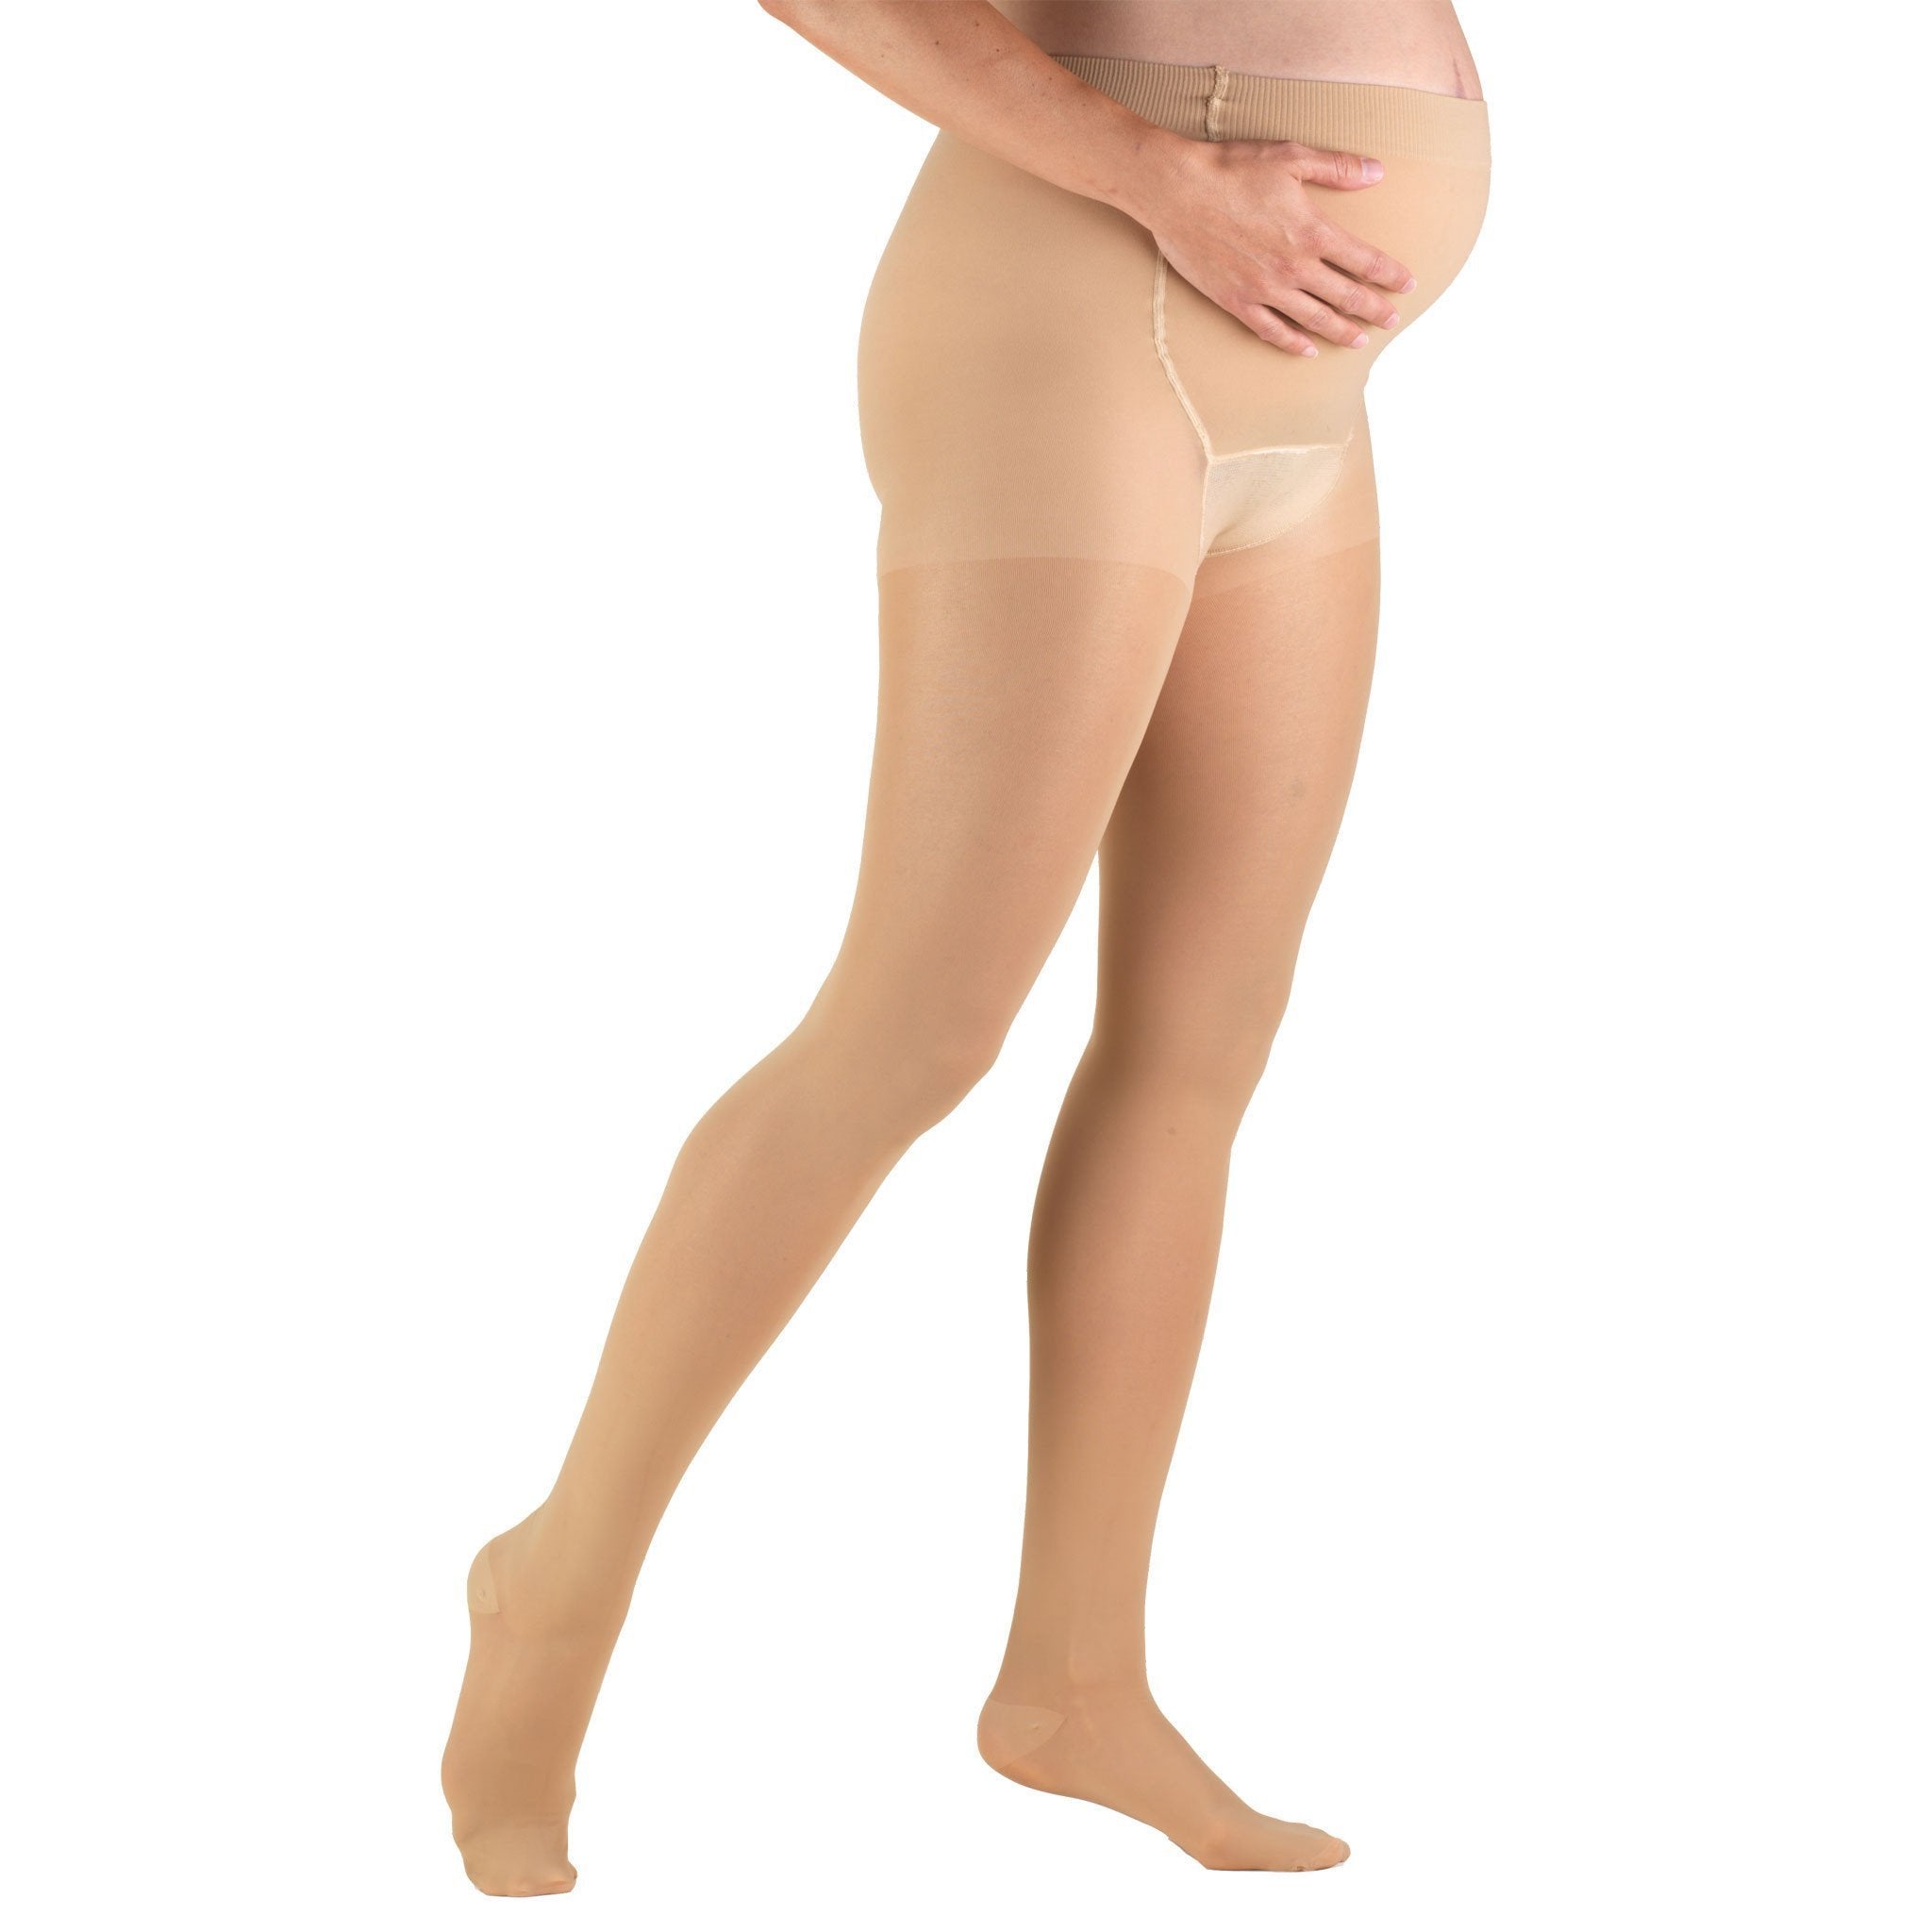  mediven sheer & soft for Women, 30-40 mmHg Thigh High